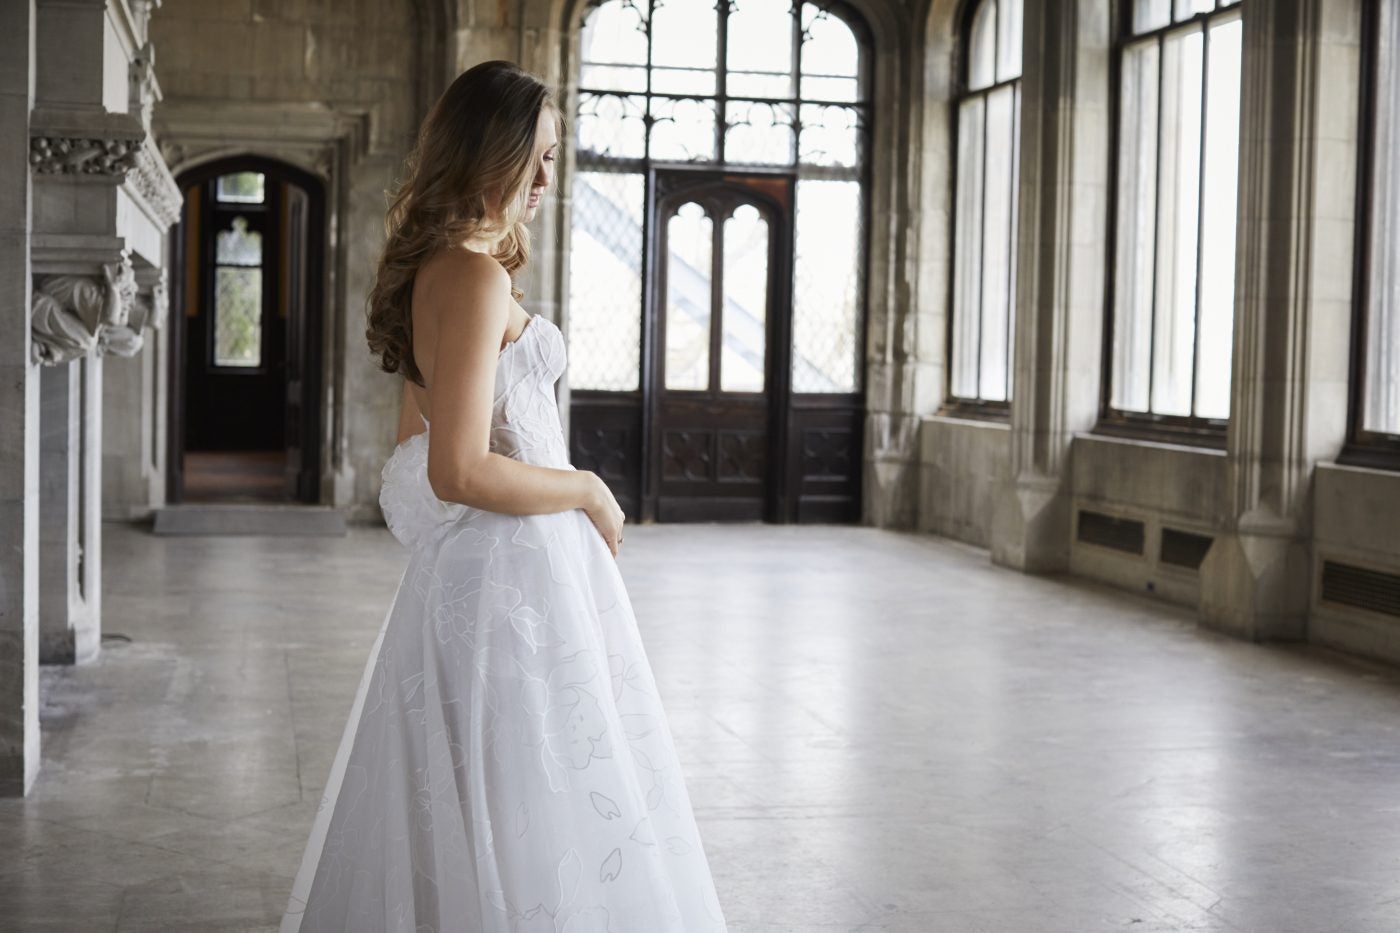 Sleeveless Wedding Dresses - Largest Selection - Kleinfeld